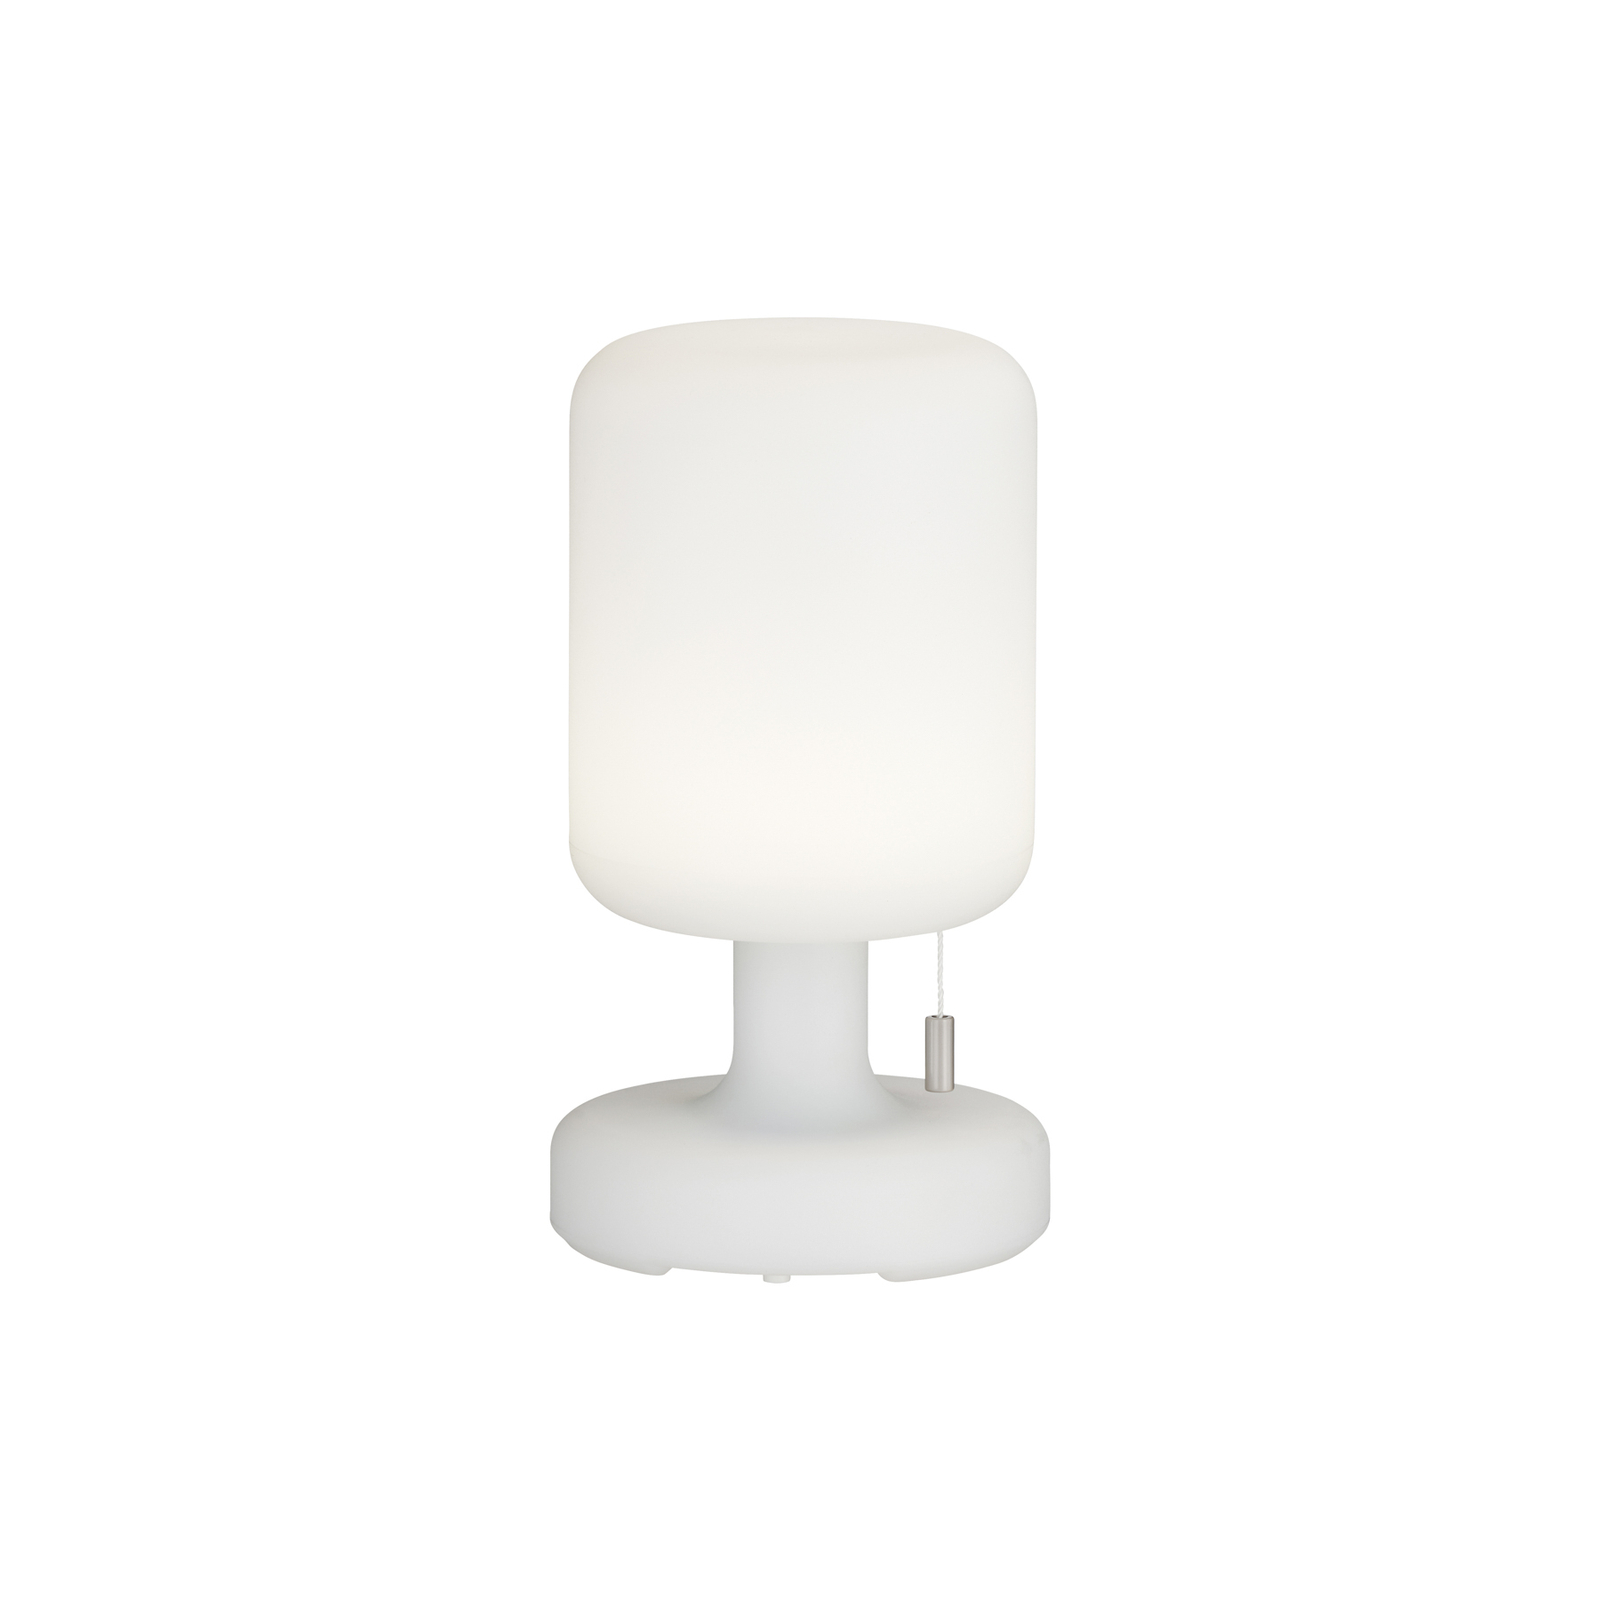 LED-batteribordslampa Termoli cylindrisk höjd 23cm